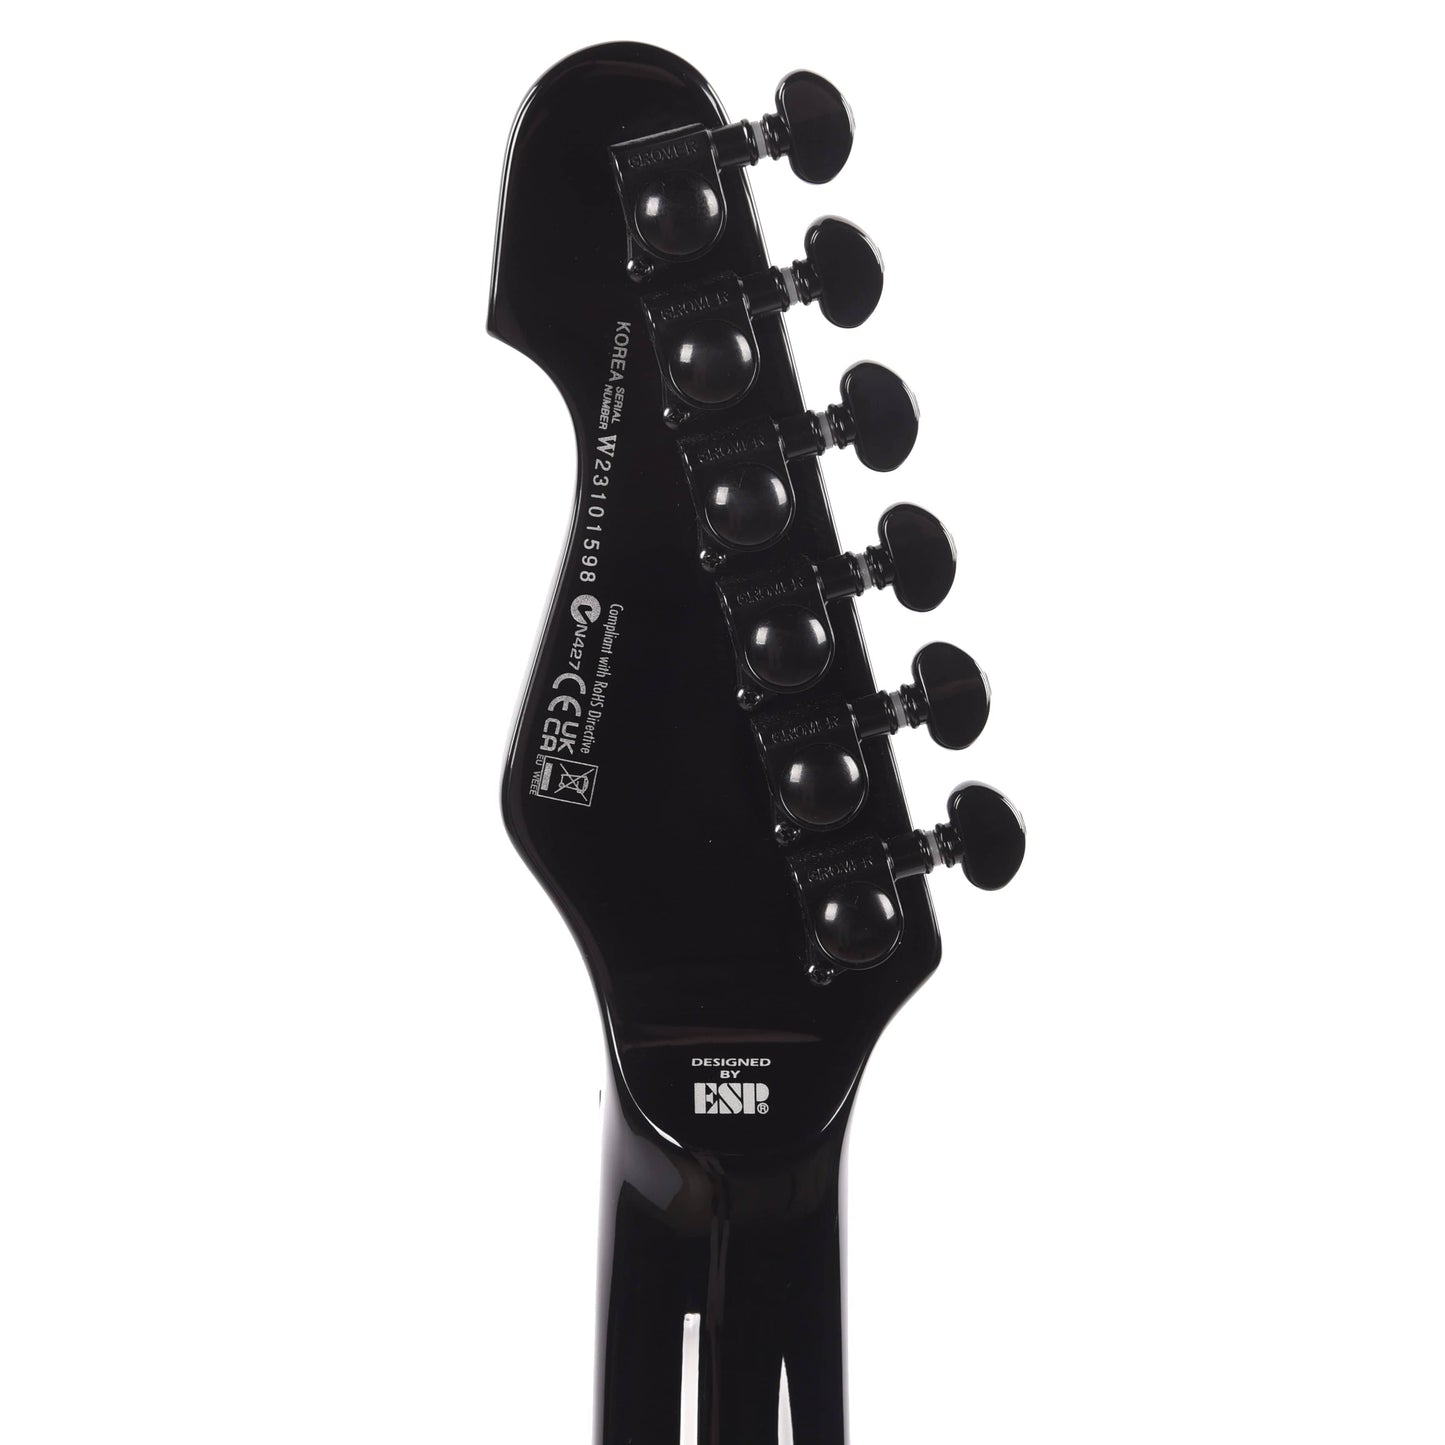 ESP LTD TE-1000 Evertune Burl Poplar Charcoal Burst Electric Guitars / Solid Body